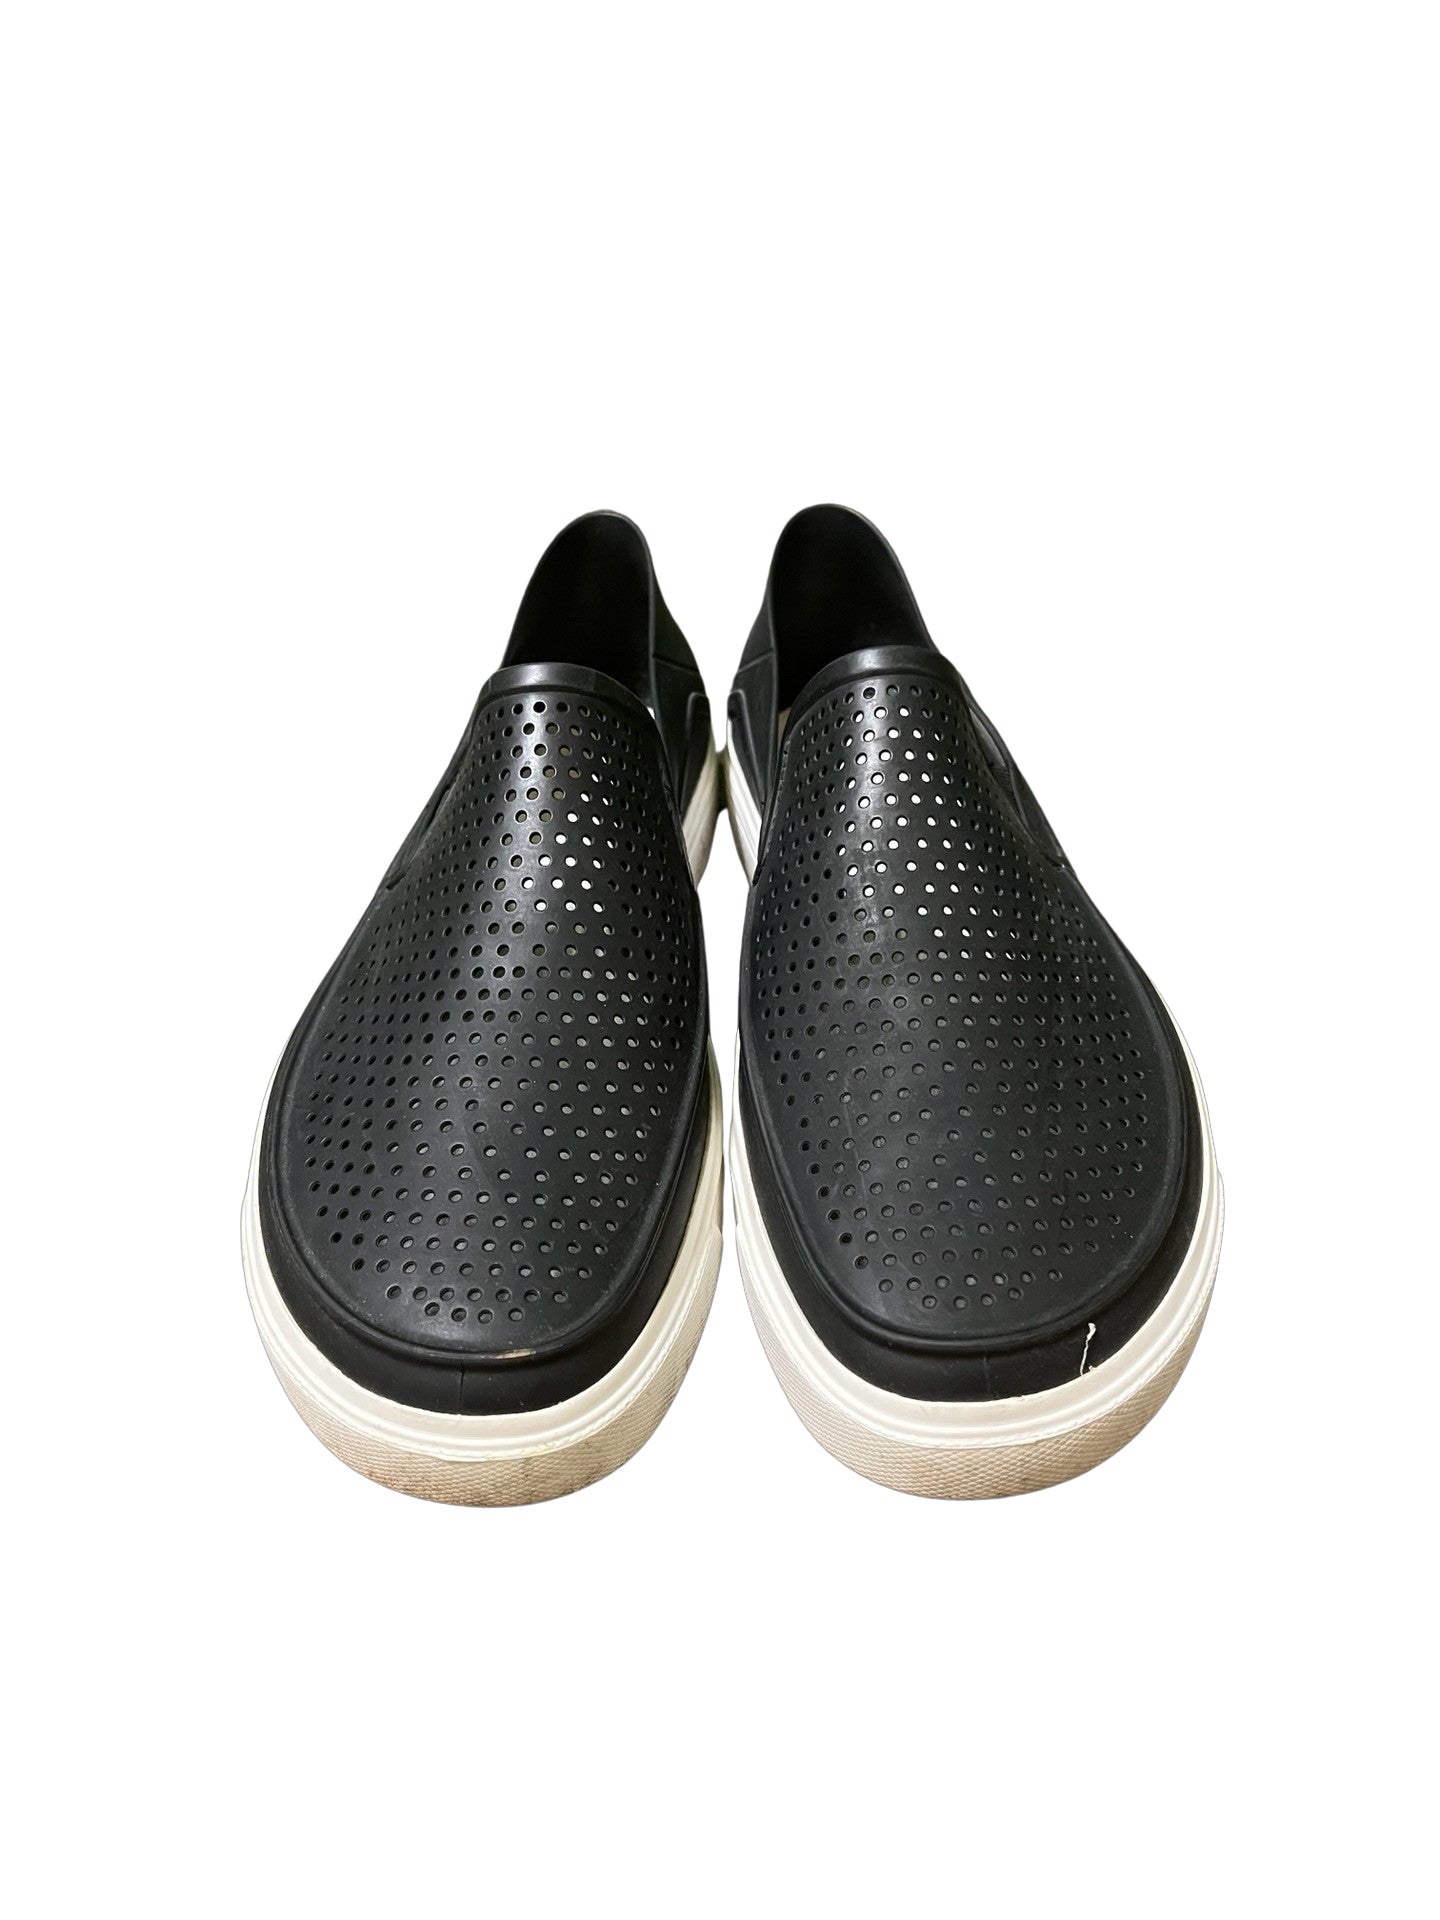 Crocs Size 12 Black sneakers